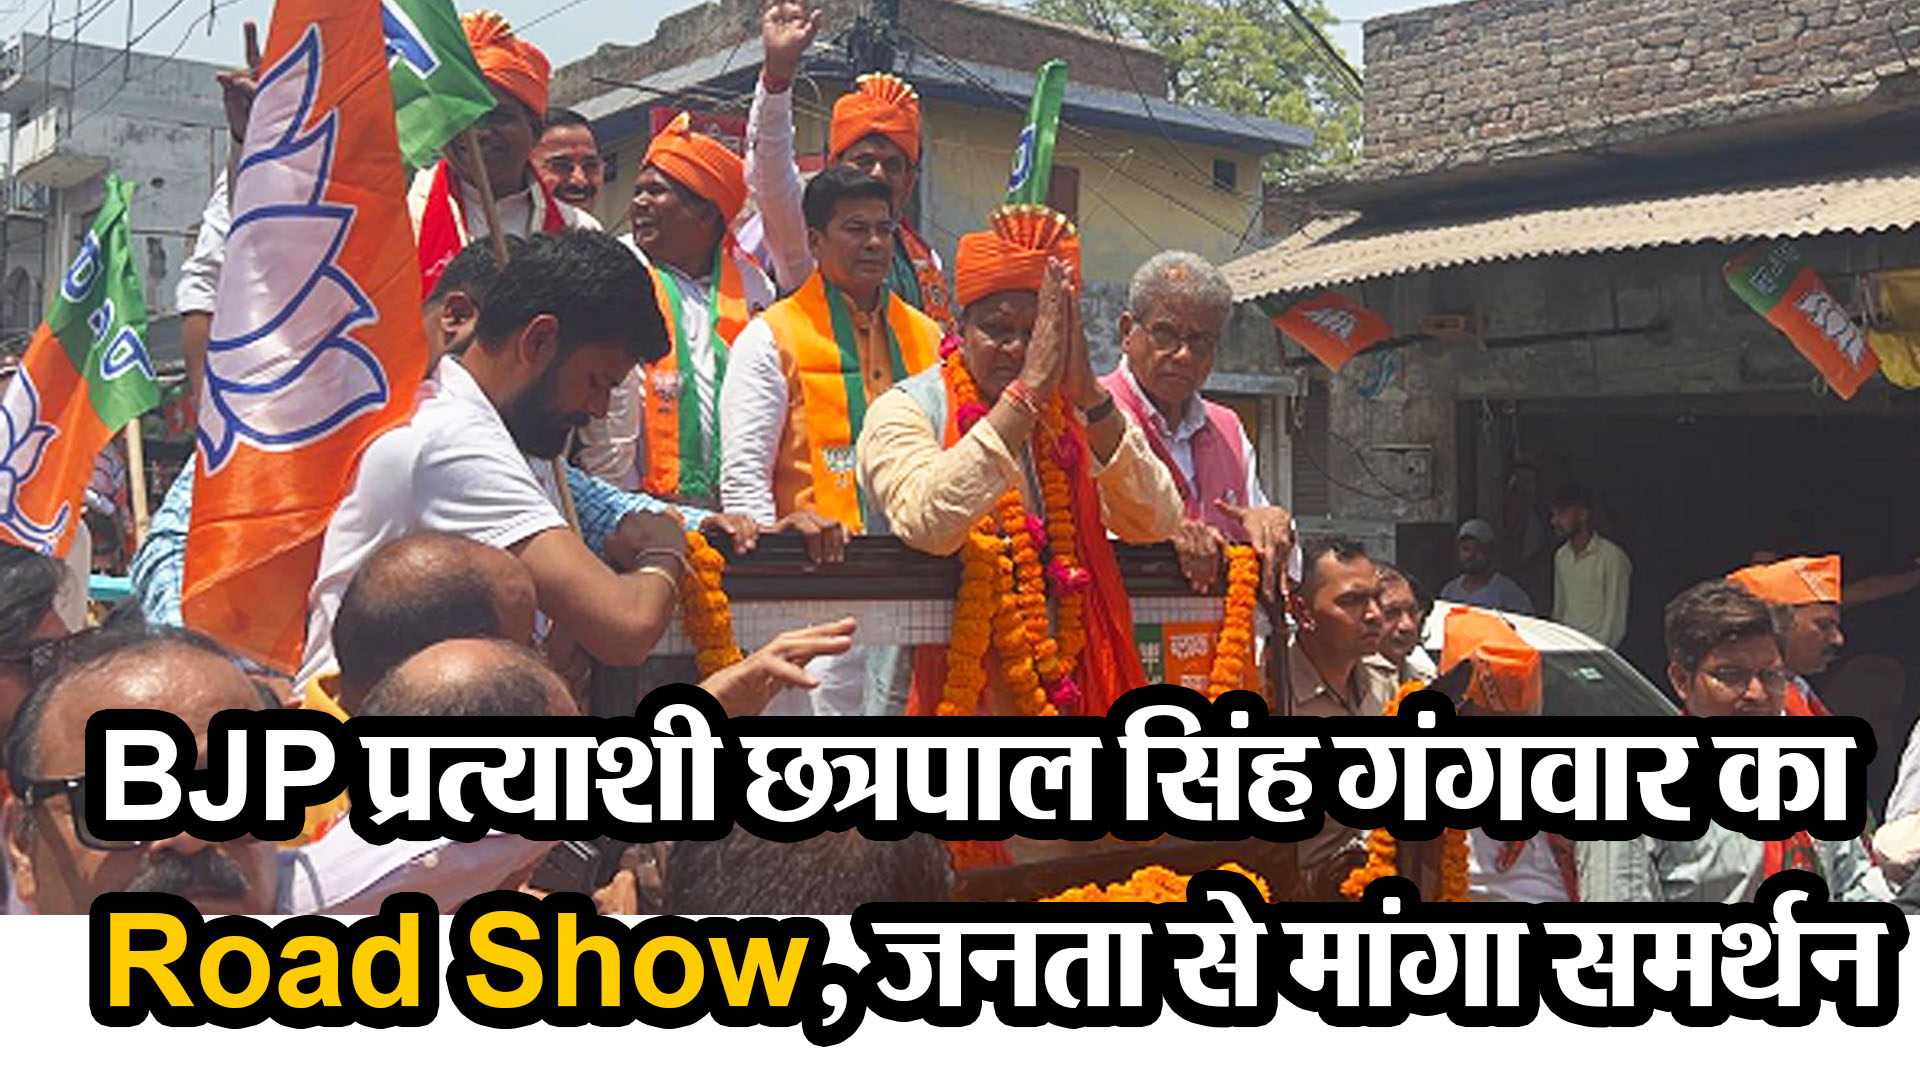 बरेली: BJP प्रत्याशी छत्रपाल सिंह गंगवार का Road Show, जनता से मांगा समर्थन